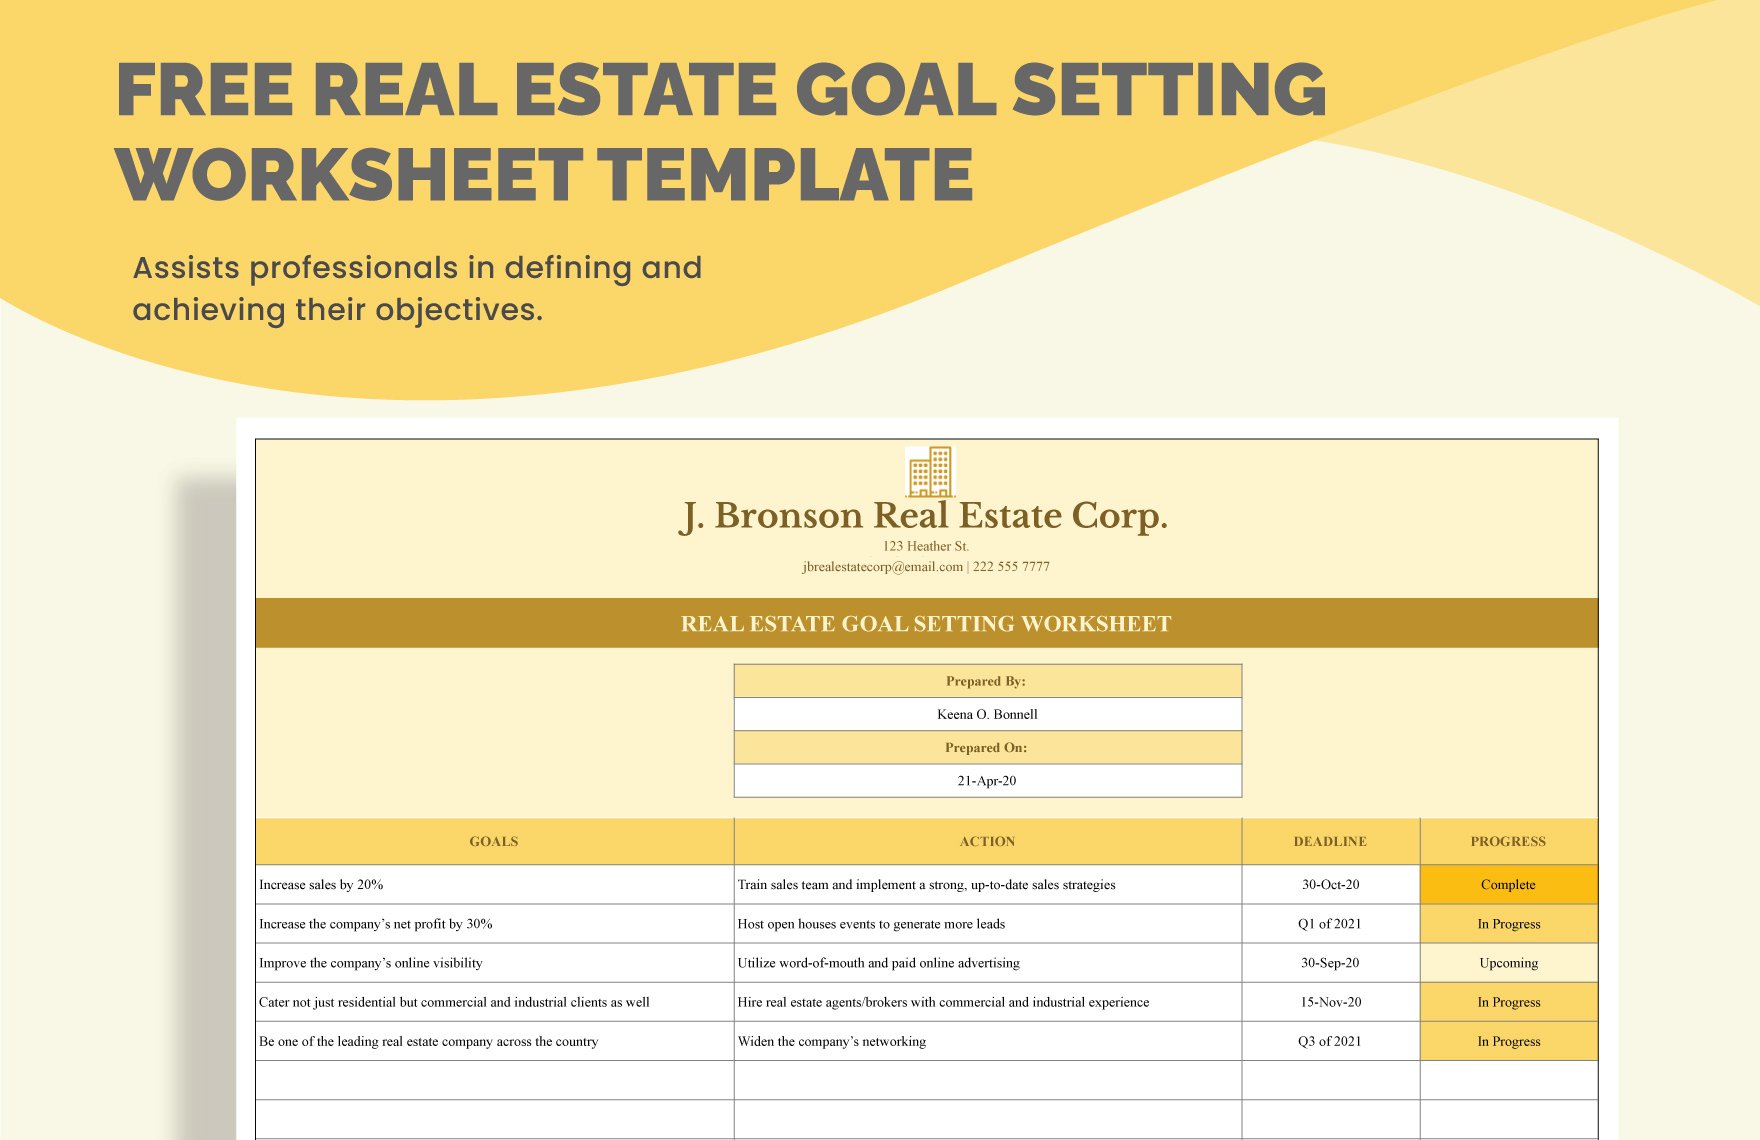 Real Estate Goal Setting Worksheet Template in Word, Google Docs, Excel, PDF, Google Sheets, Apple Numbers